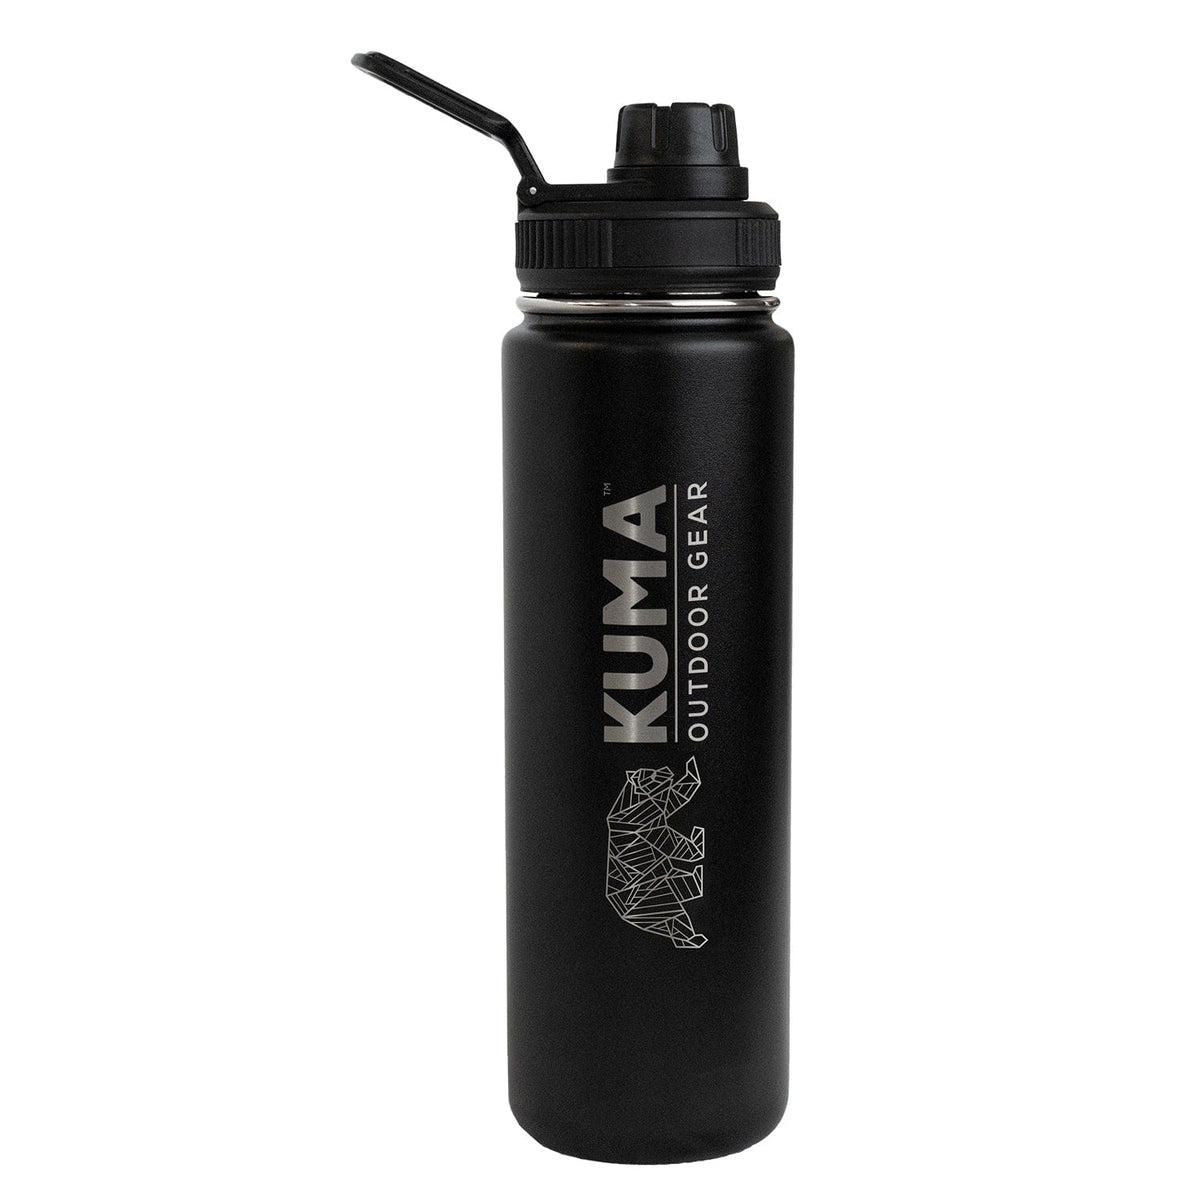 Kuma Outdoor Gear Qualifies for Free Shipping Kuma Outdoor Gear Bomber Bottle Black #225-KM-BB-BB